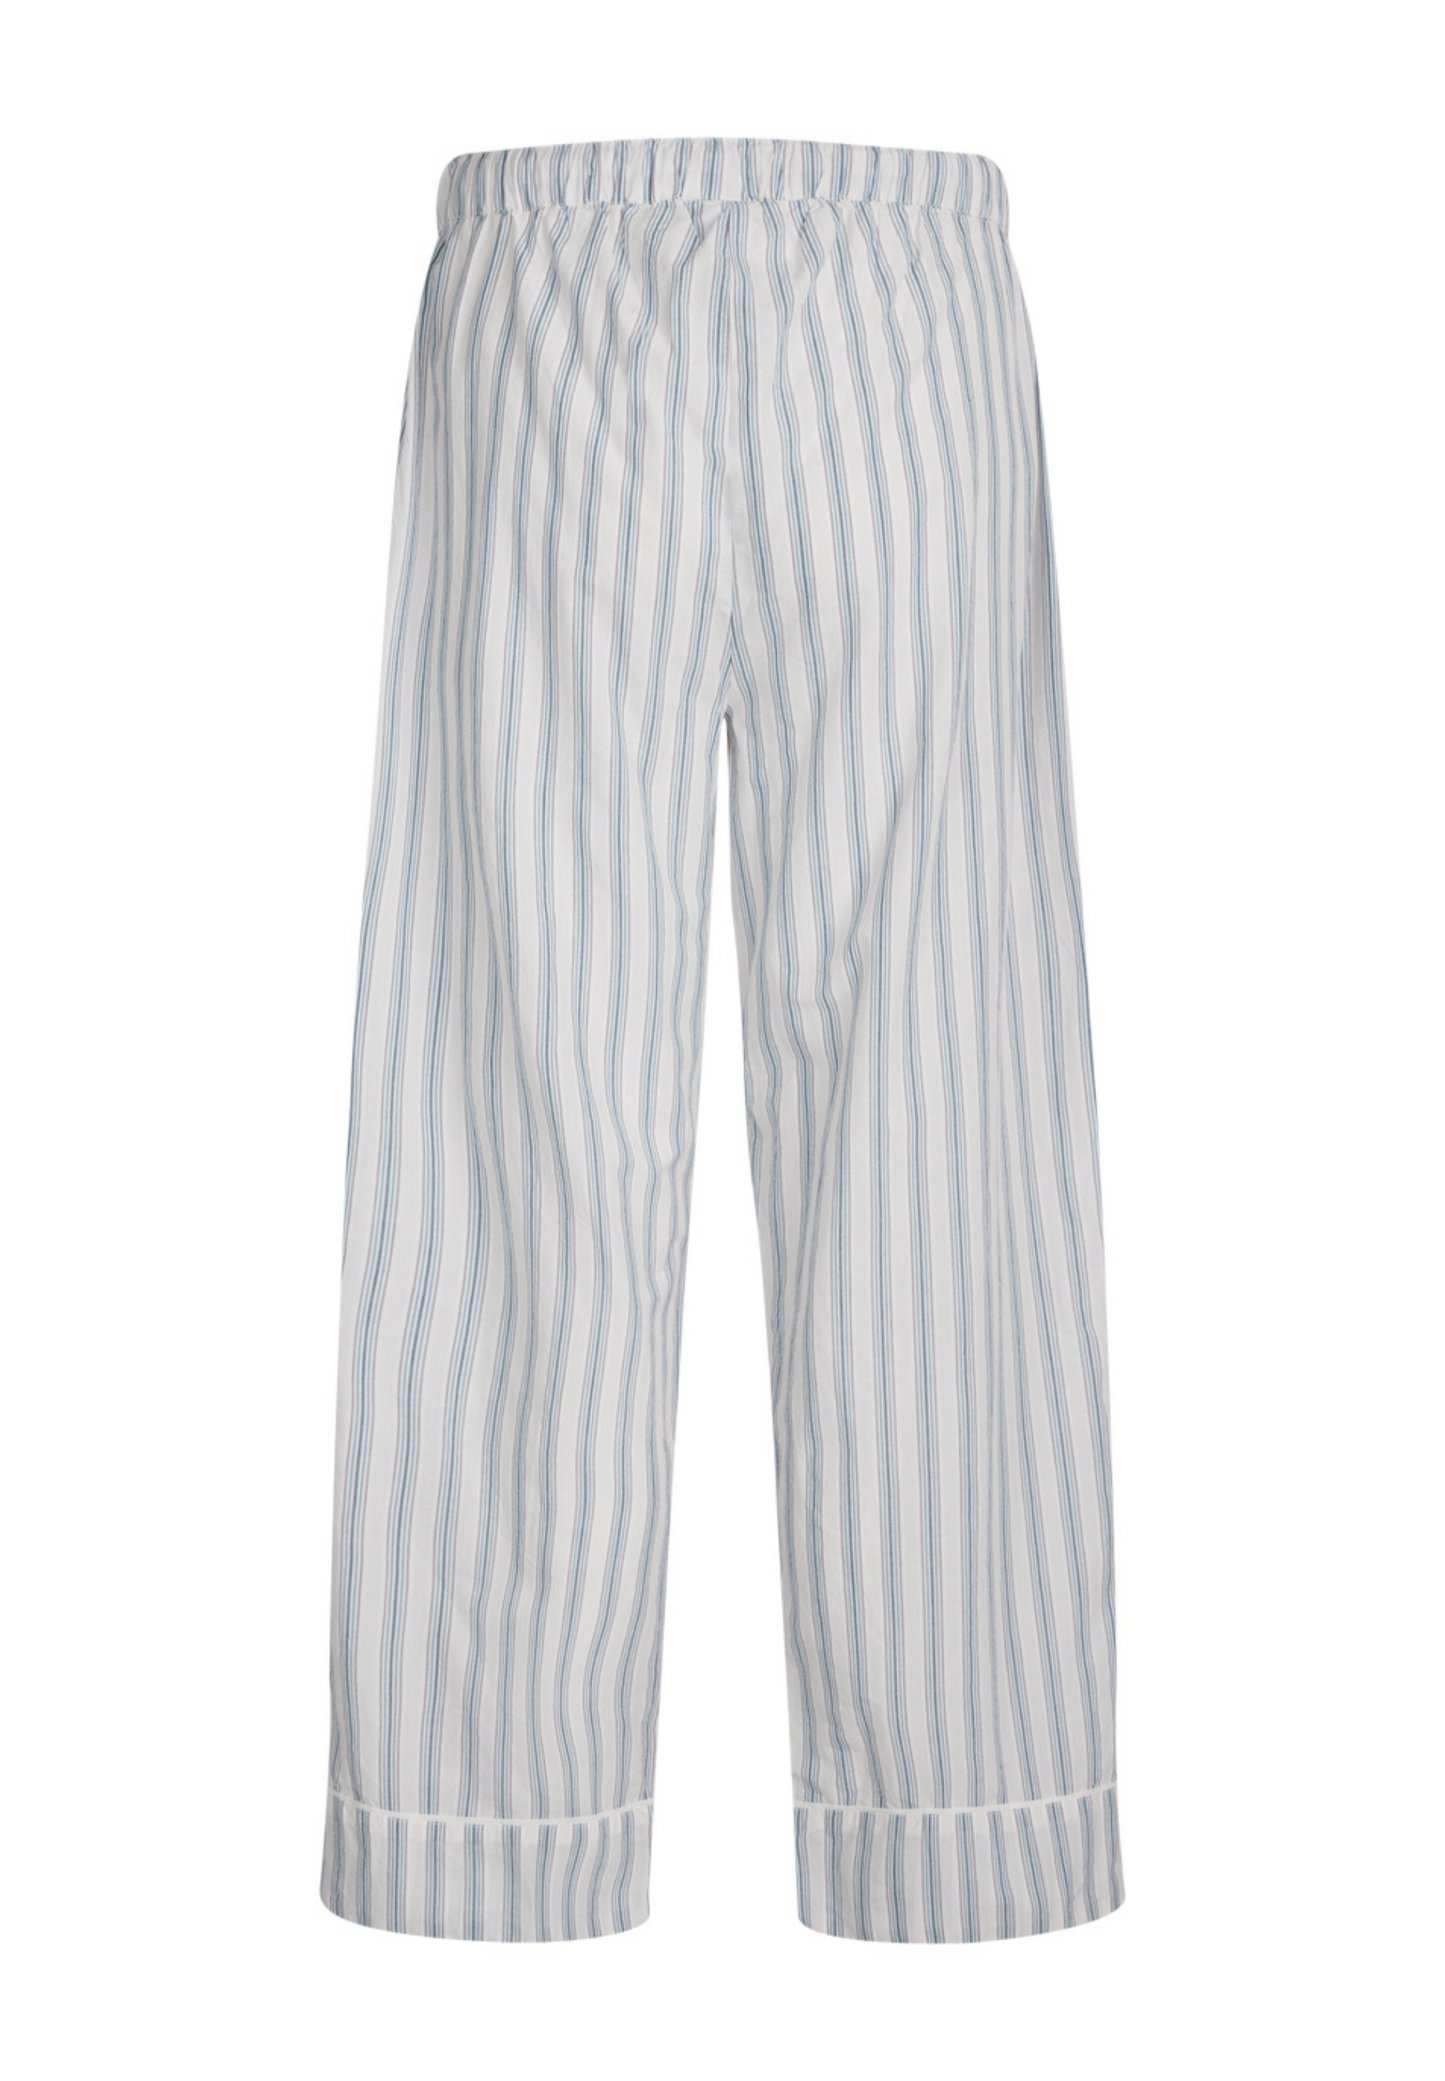 Nicola Pyjamasbukser blåstribet